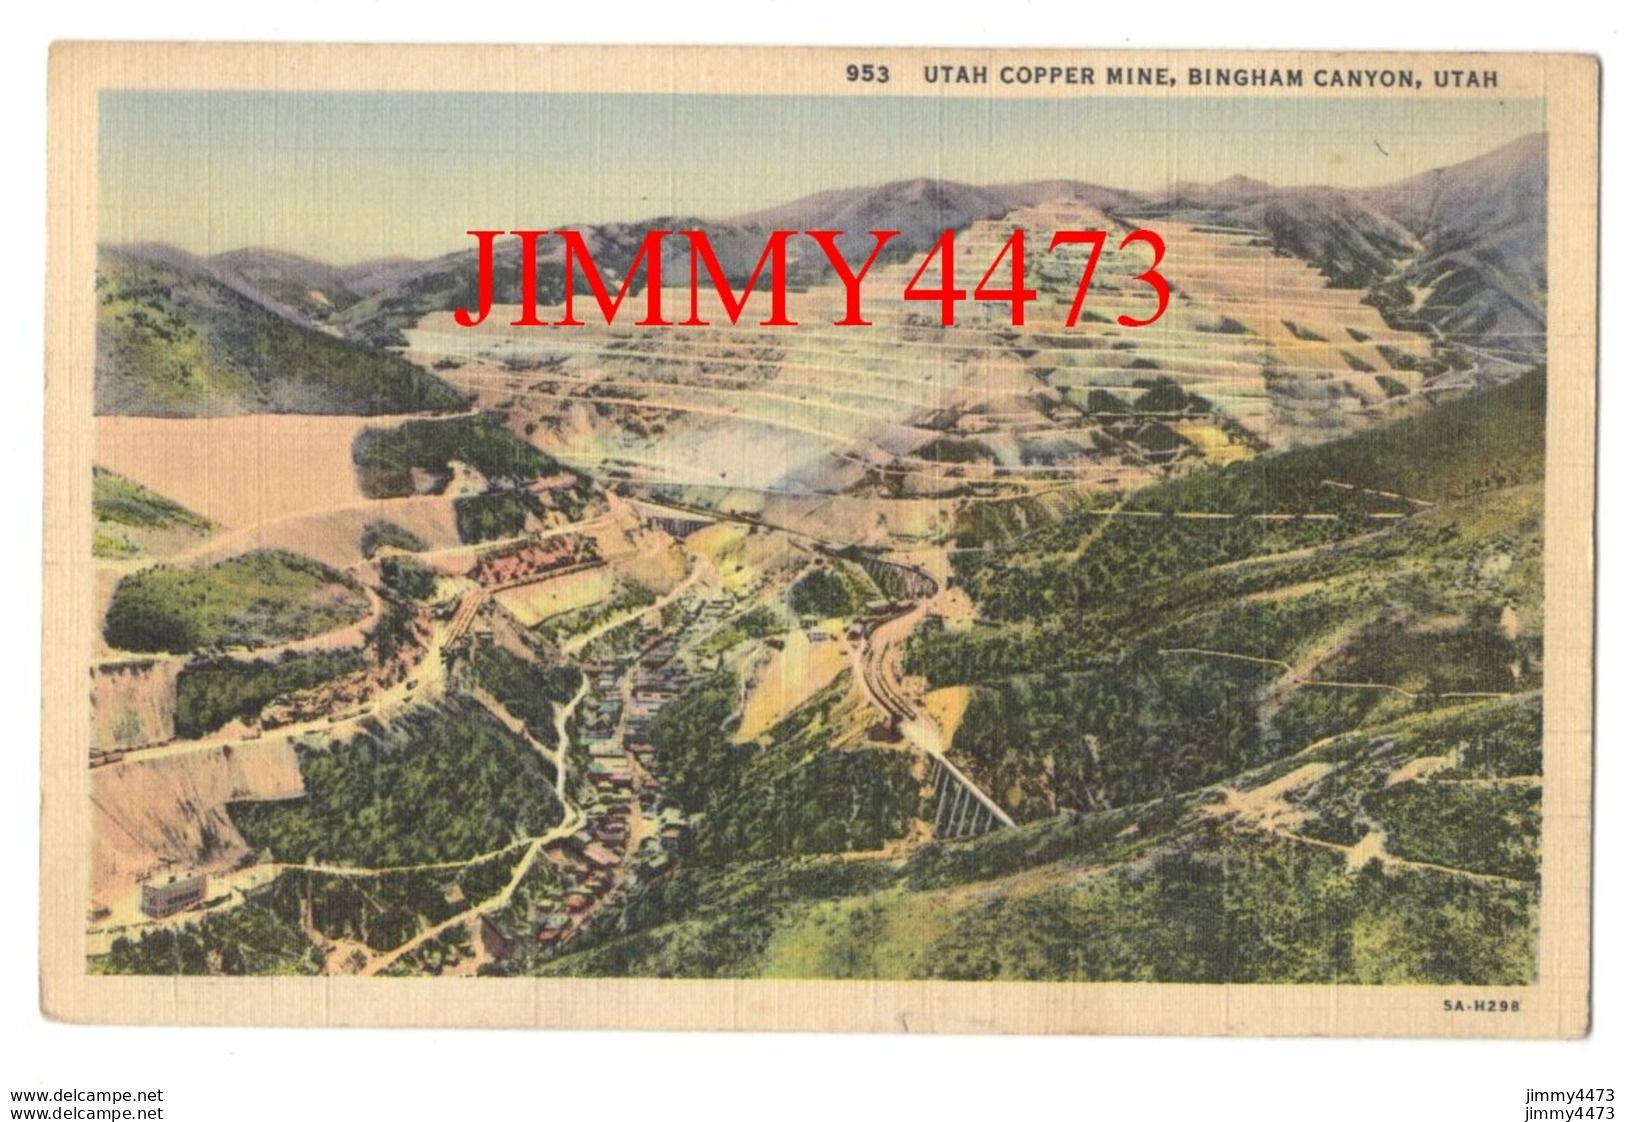 En 1939 - UTAH COPPER MINE BINGHAM CANYON, UTAH - U. S. A. - DESERET BOOK COMPANY SALT LAKE CITY - Salt Lake City